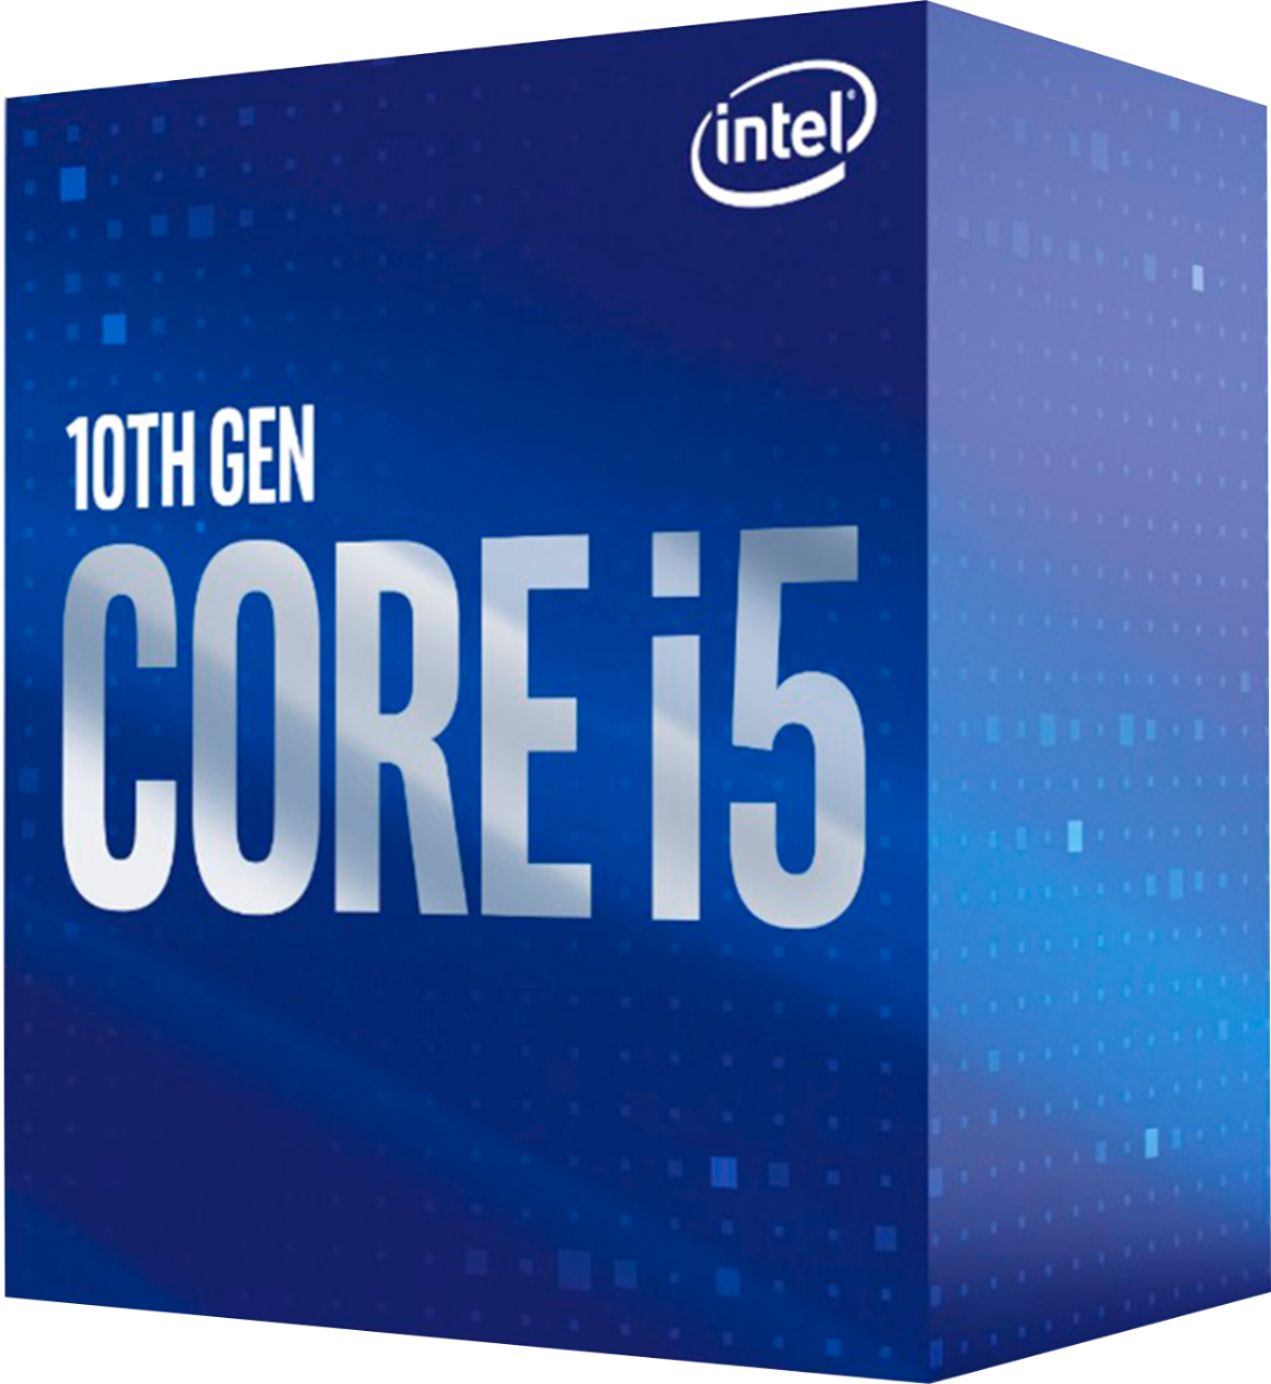 Intel Core i5-10400 10th Generation 6-Core 12-Thread 2.9 GHz (4.3 GHz Turbo) Socket LGA1200 Locked Desktop Processor BX8070110400 - Best Buy